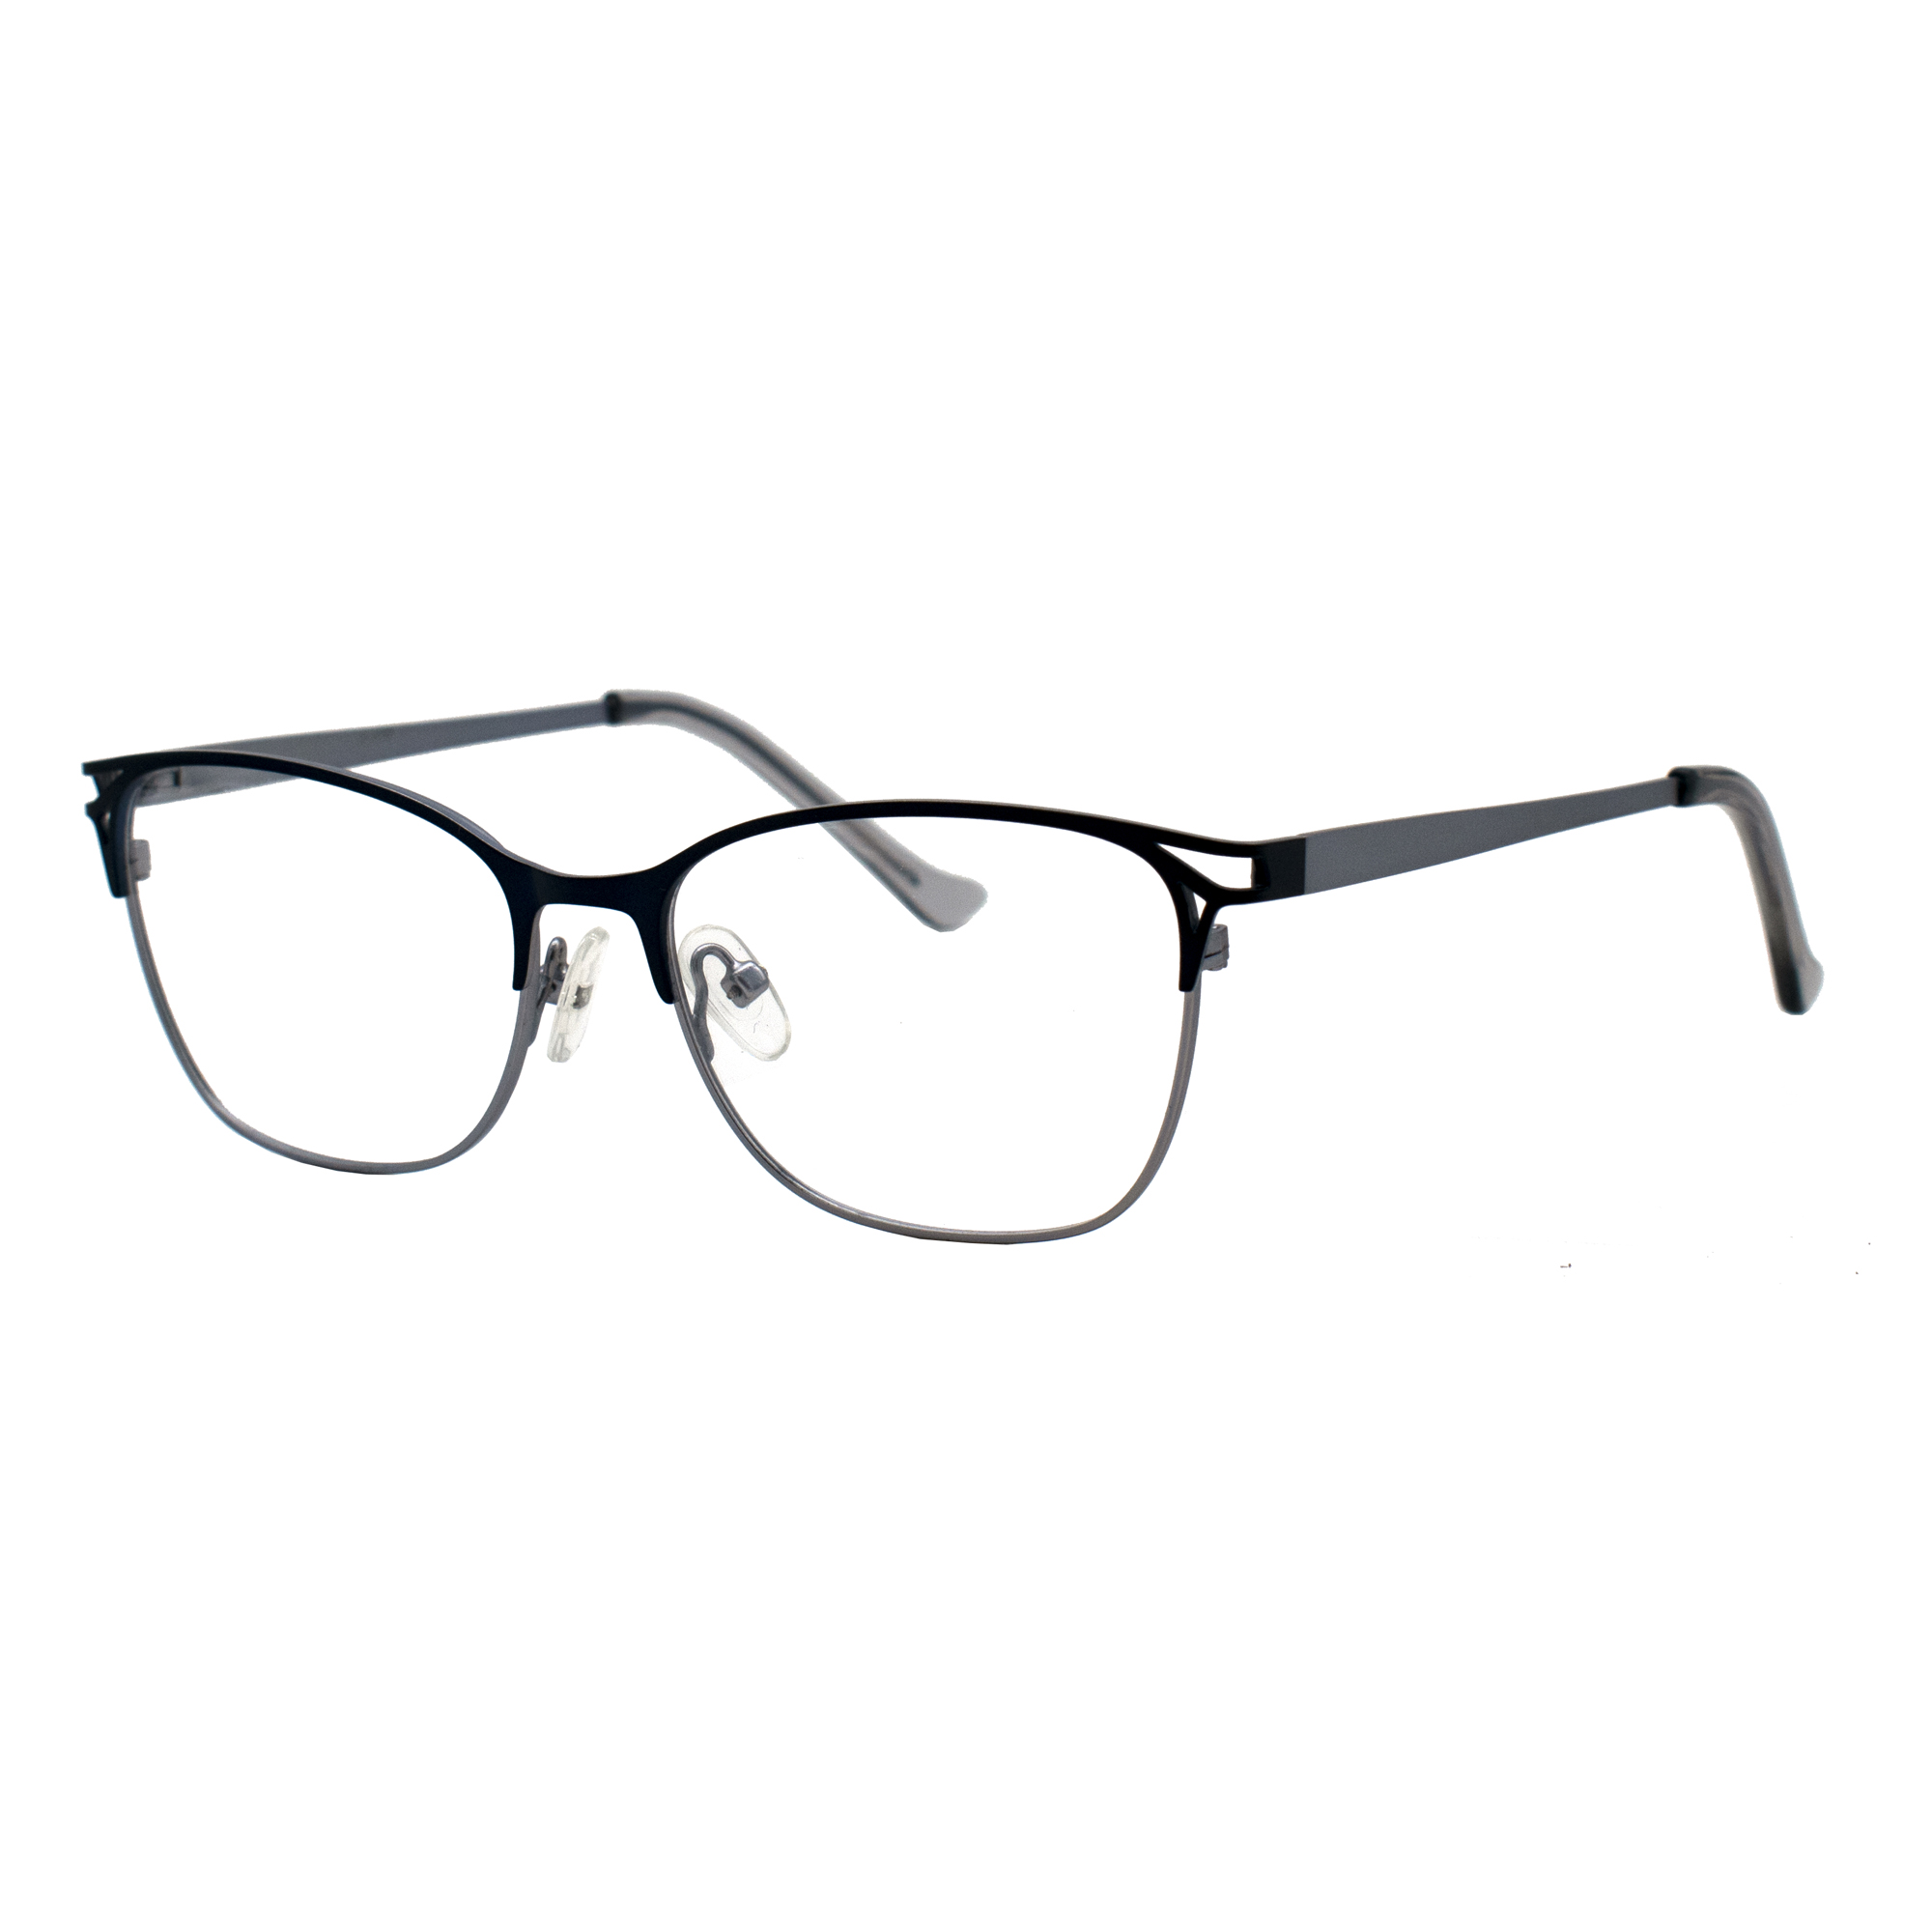 Walmart Women's Rx'able Eyeglasses, WM200650-1, Navy, 50-15-135 - image 2 of 5